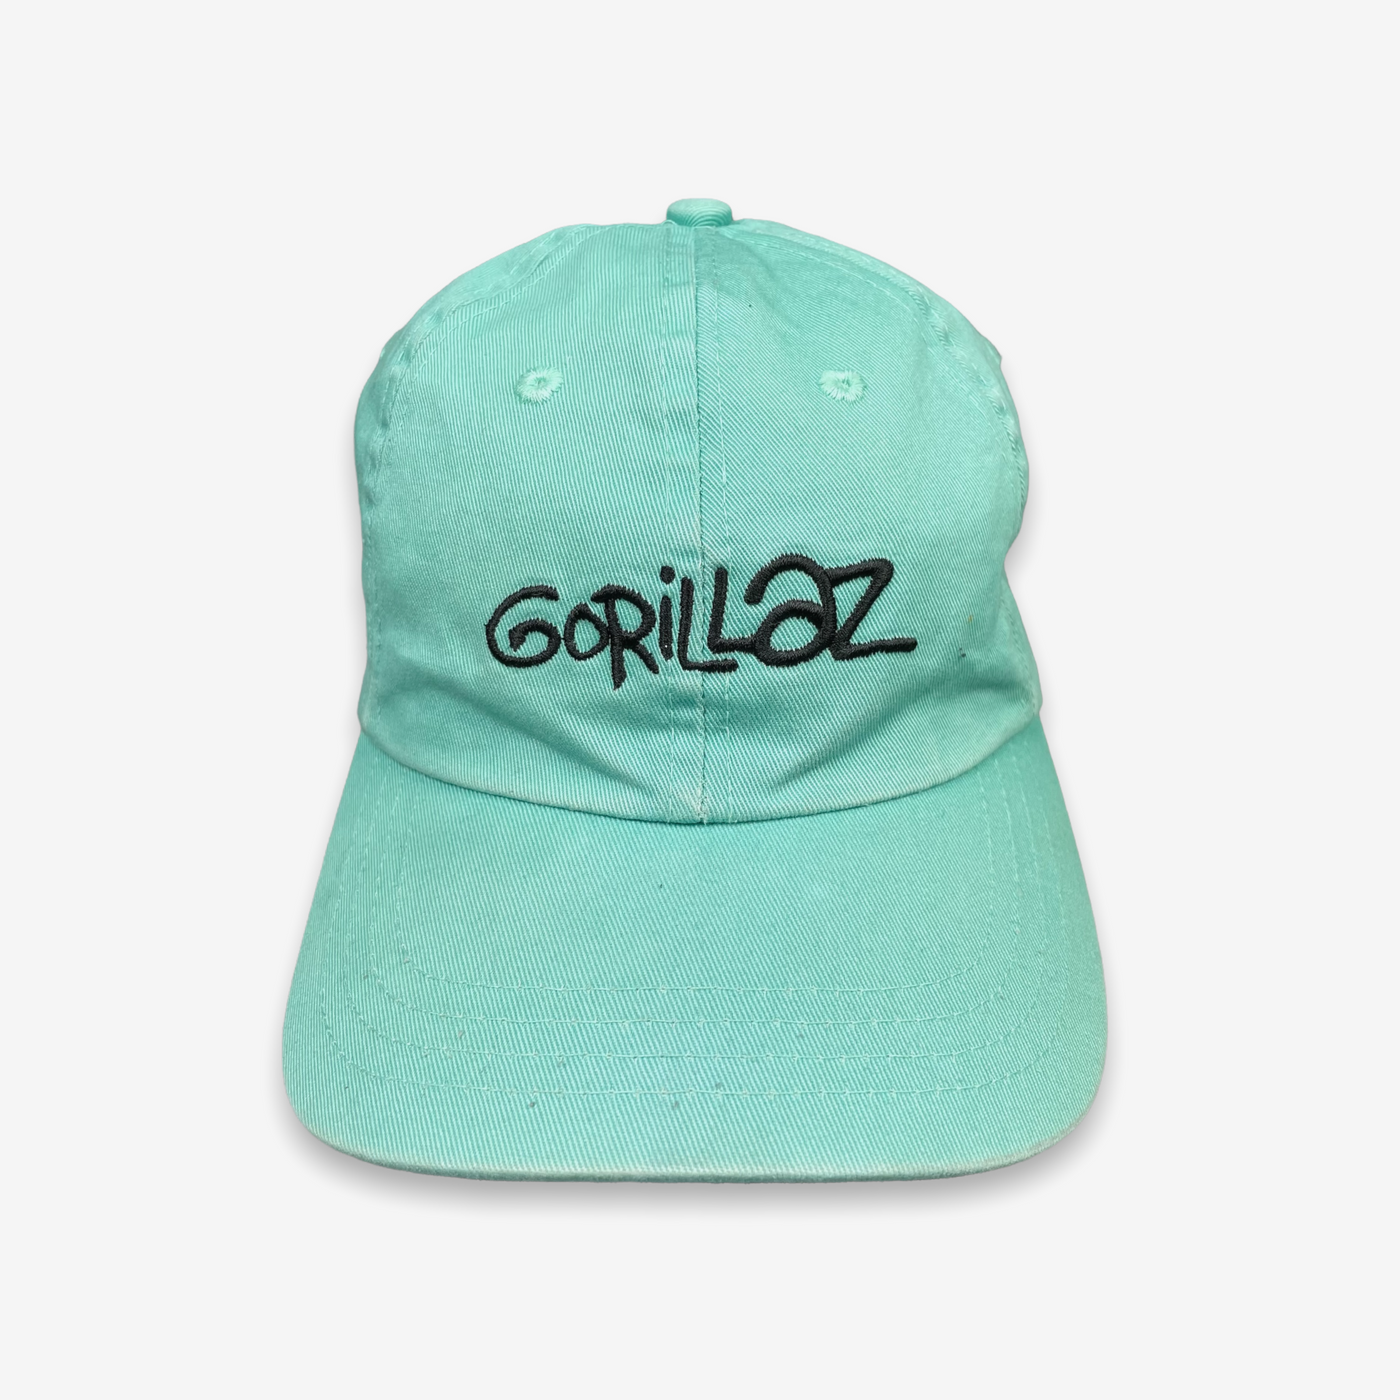 2001 GORILLAZ CAP